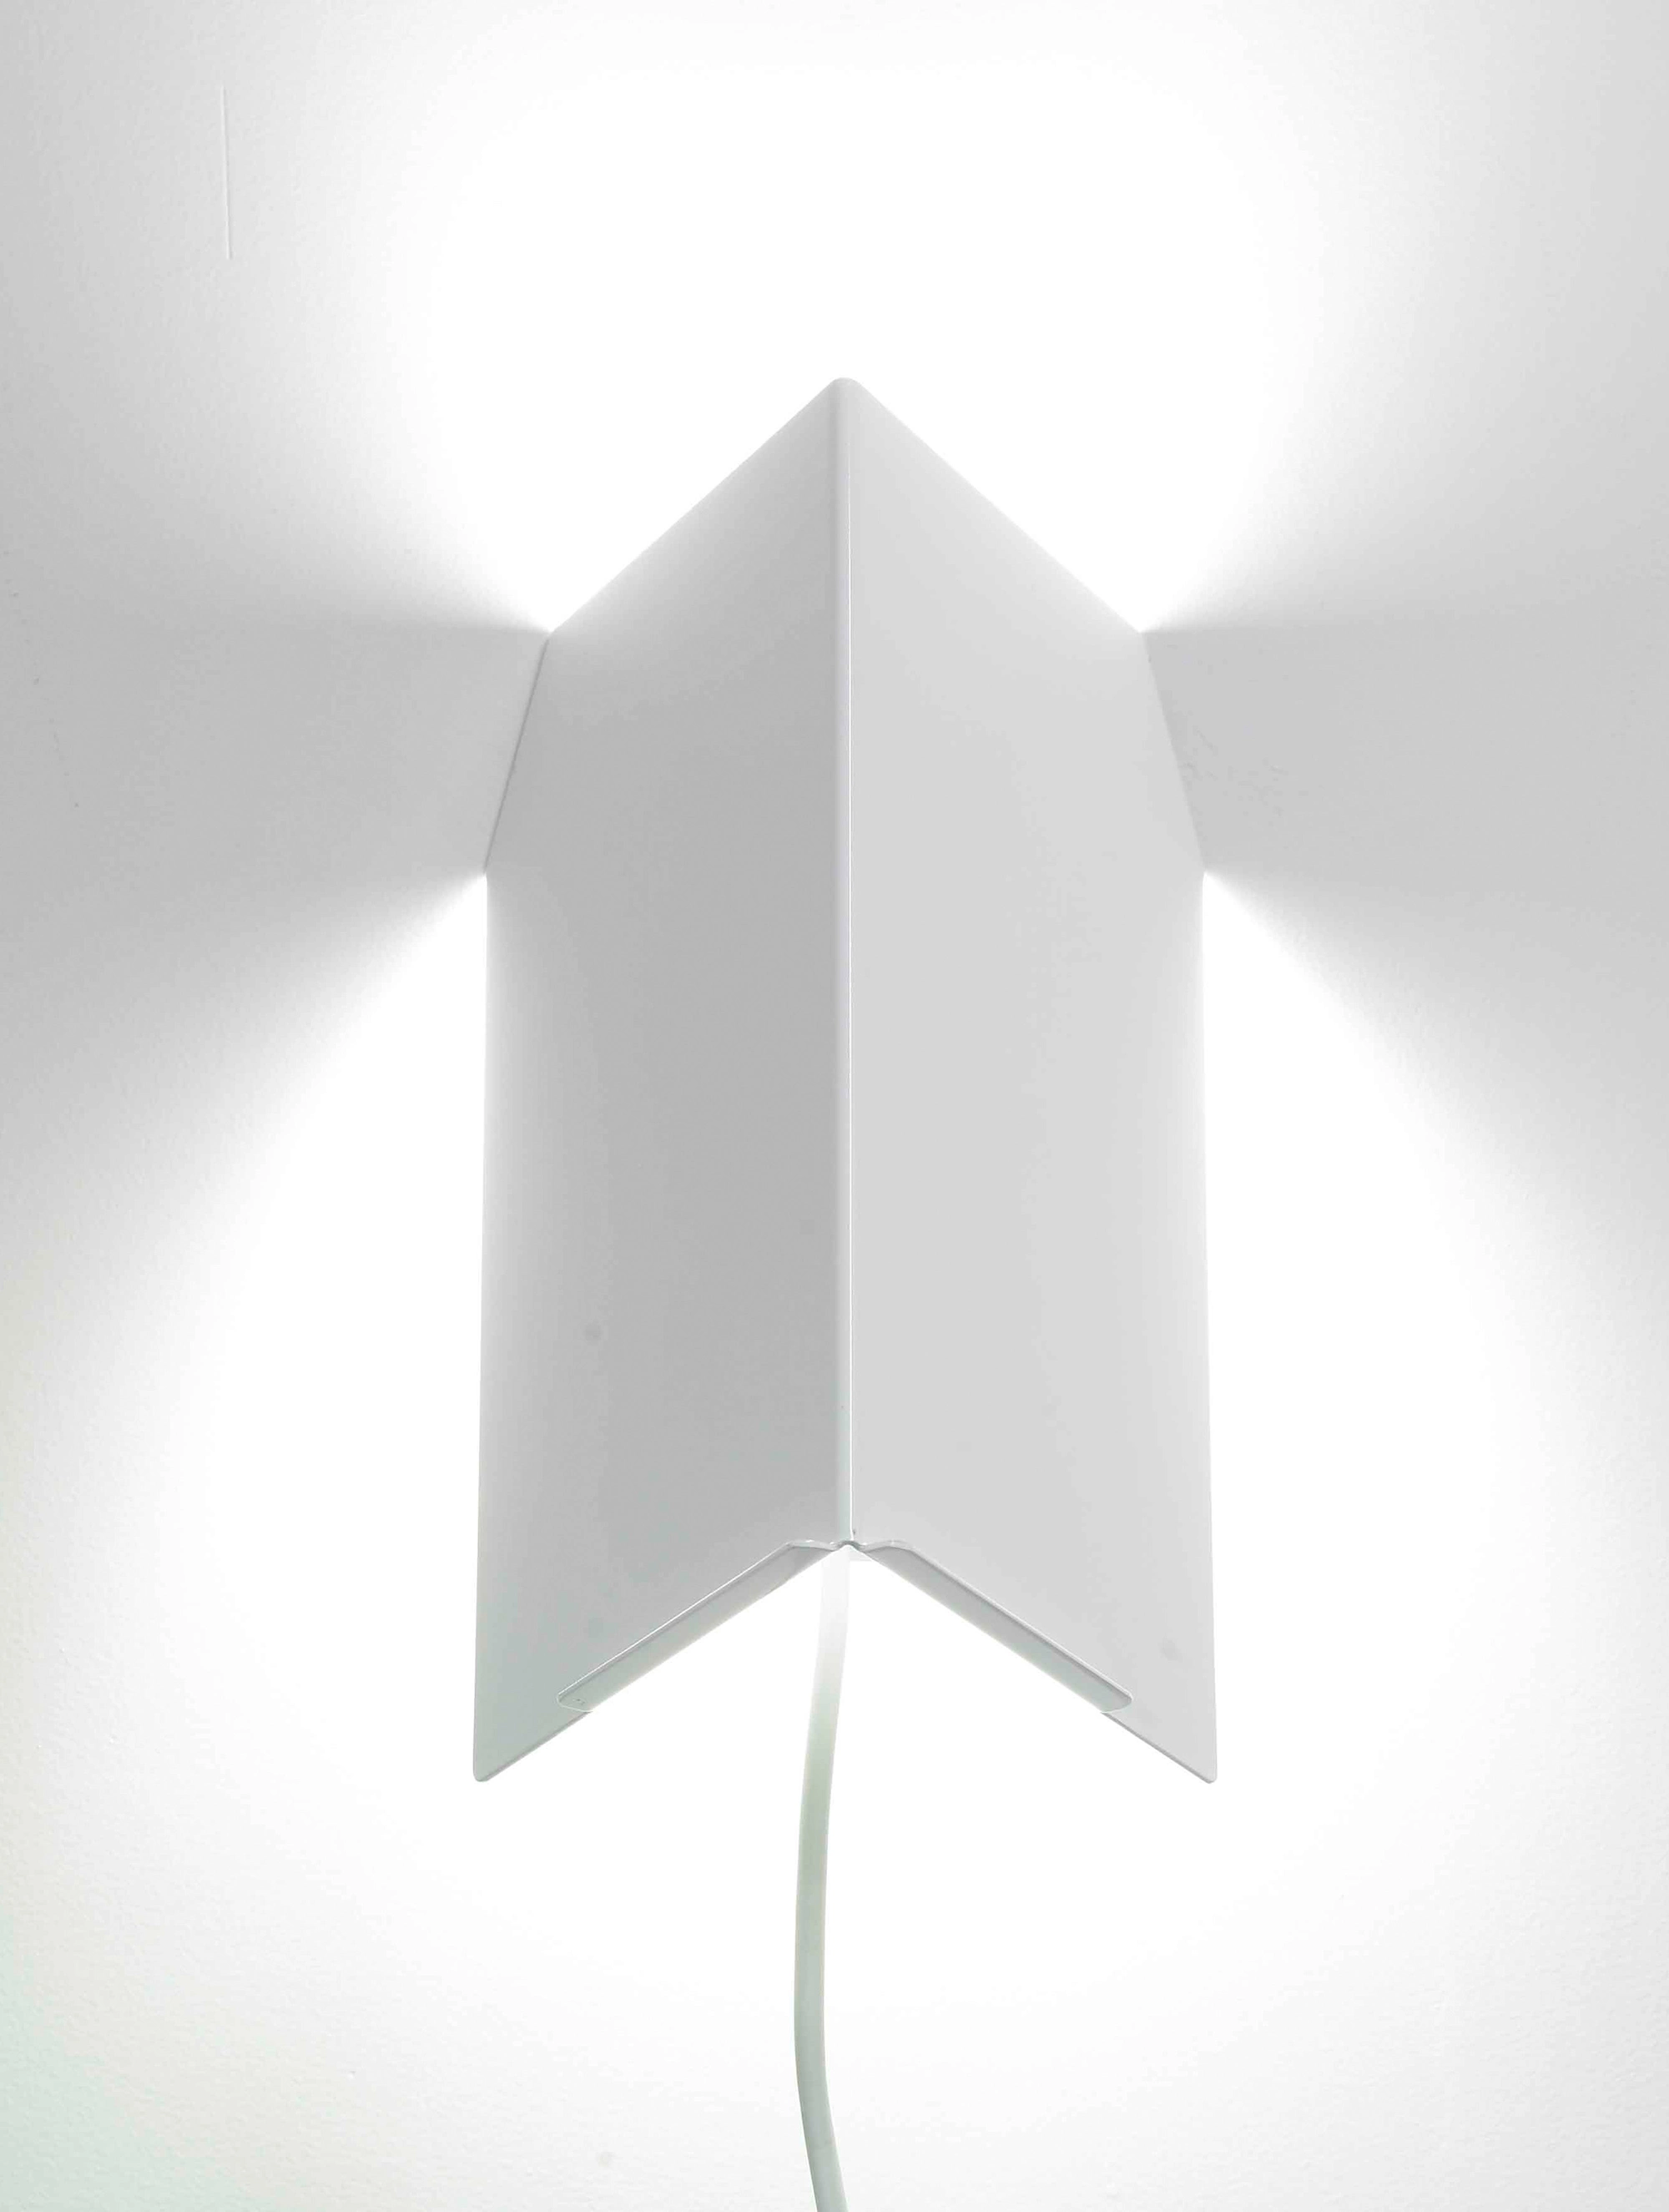 MD Wall light small model - David Dubois - Wall light - Galerie kreo